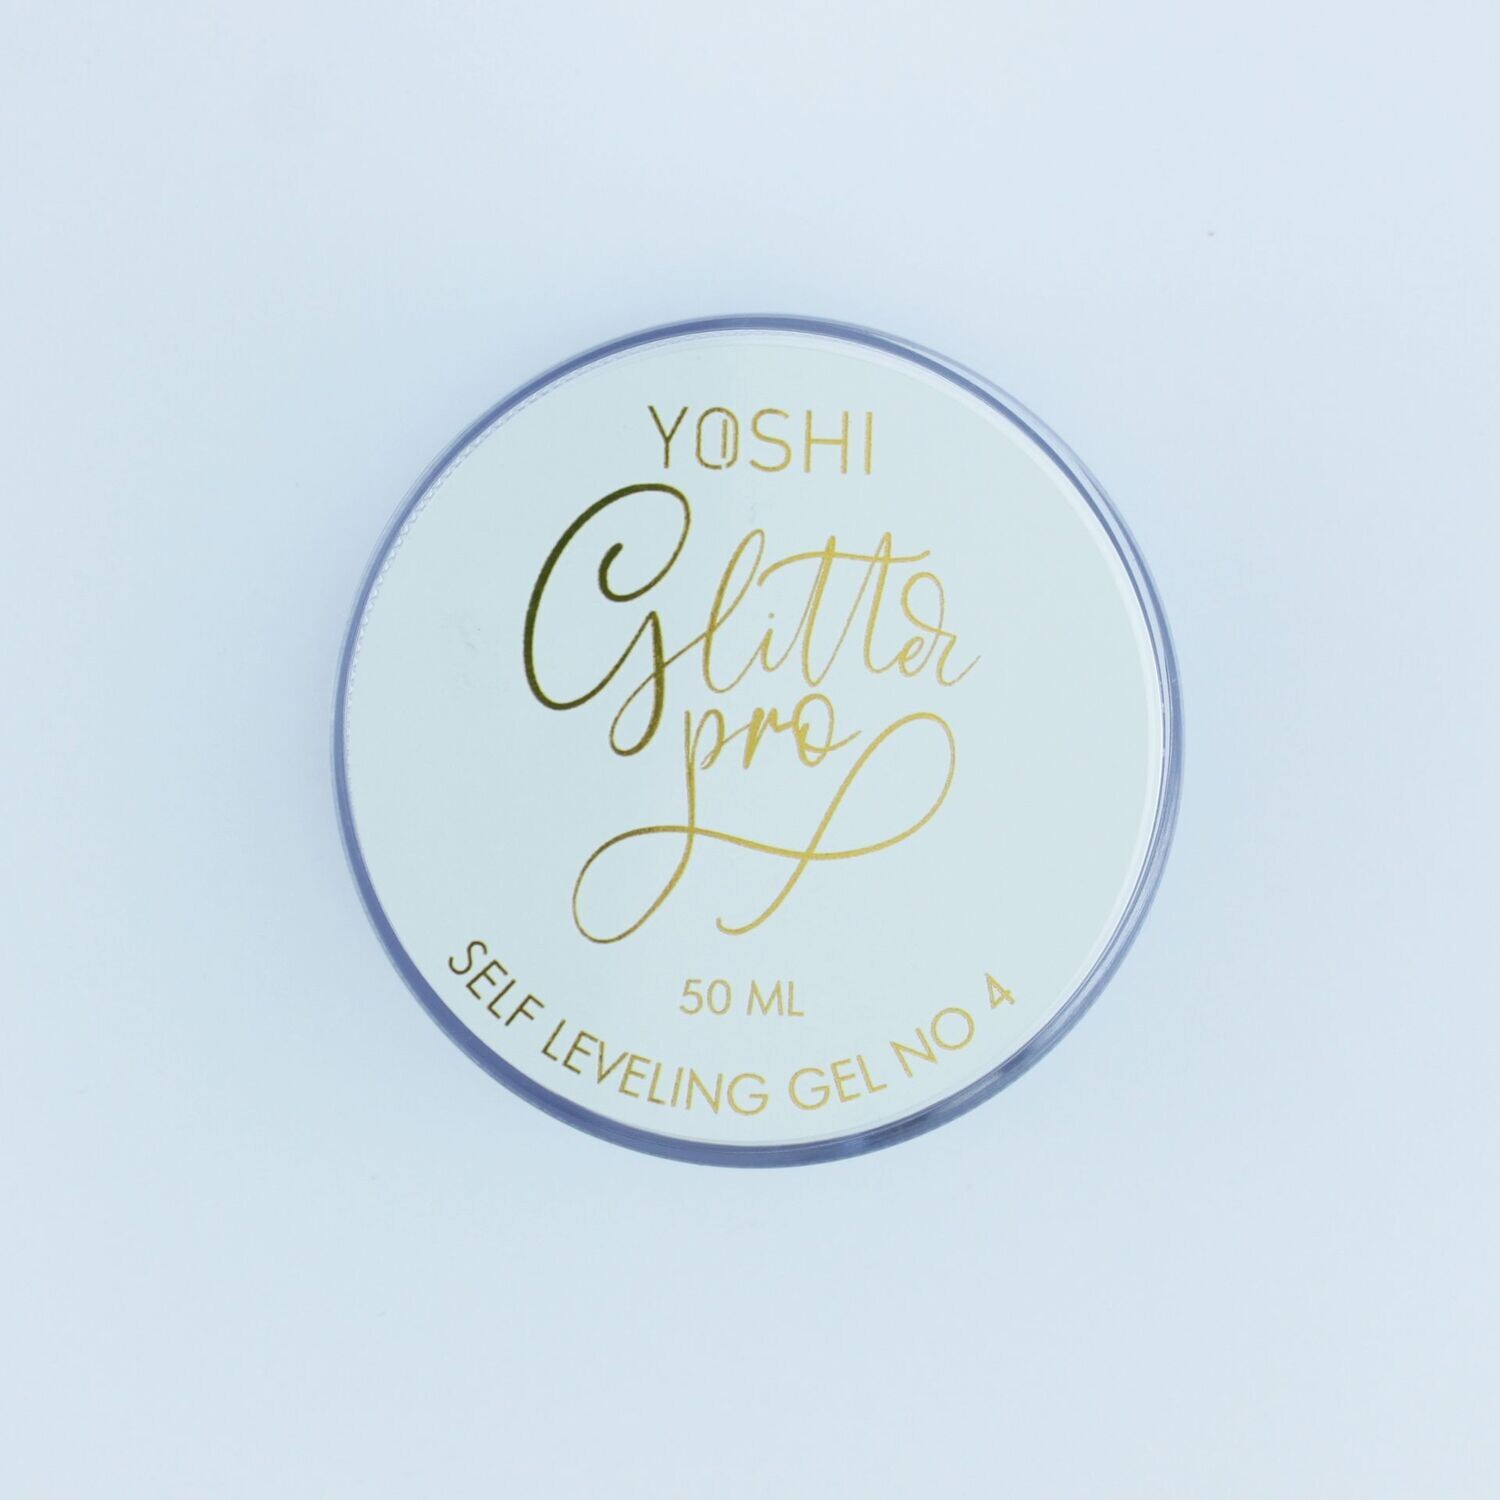 Yoshi Glitter Pro Uv Gel Self Leveling No4 50 ml